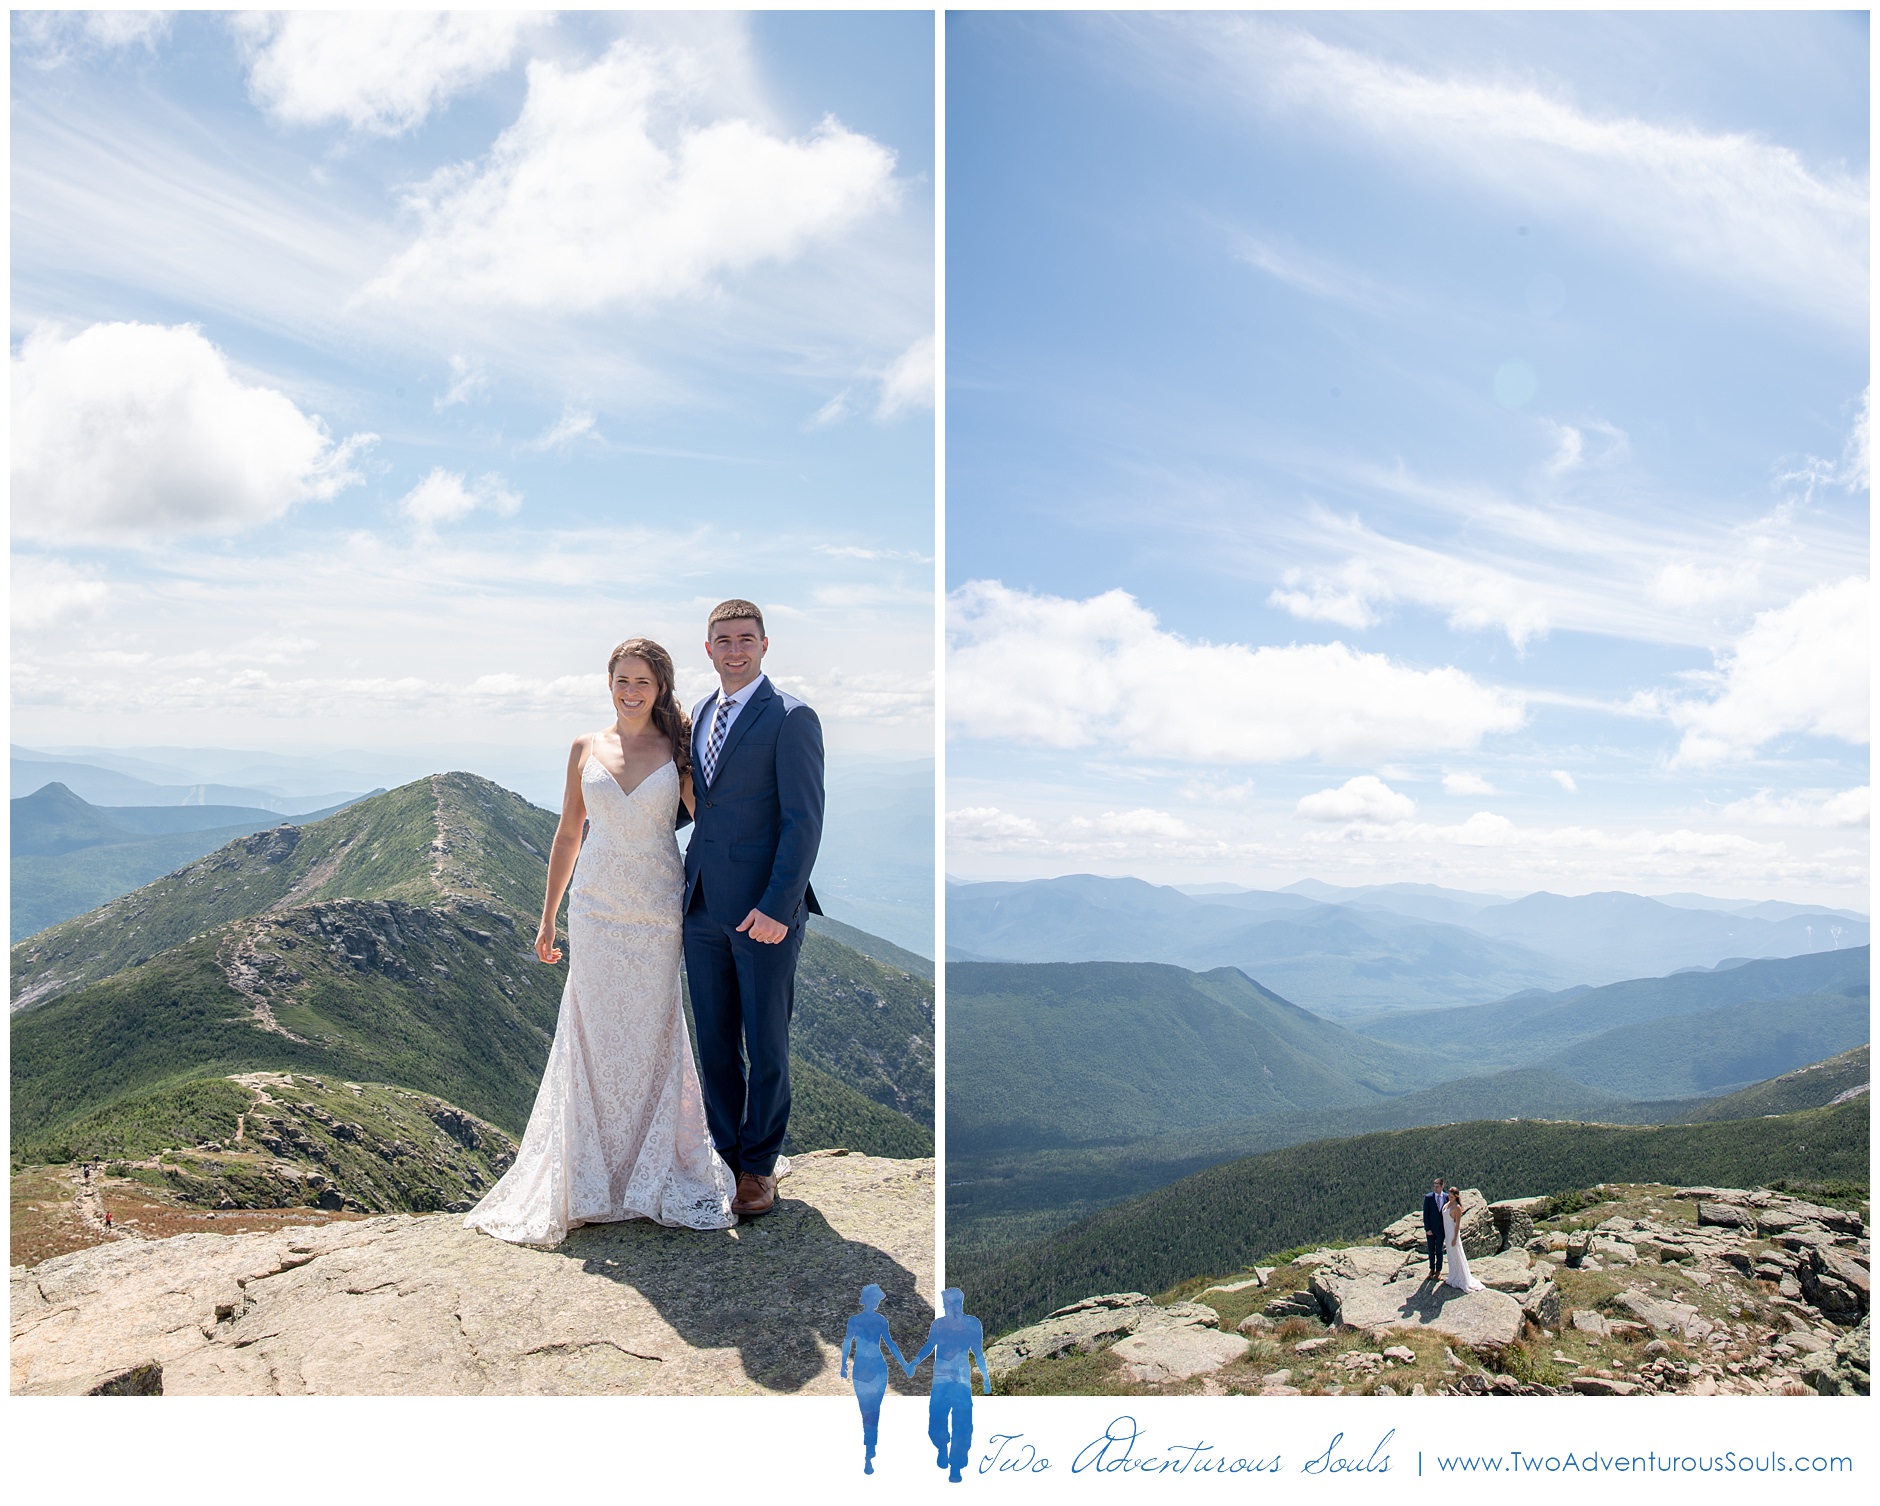 081818 - Chana & Rich - wedding SNEAKS-123_Adventure Wedding, Destination Wedding Photographers.jpg